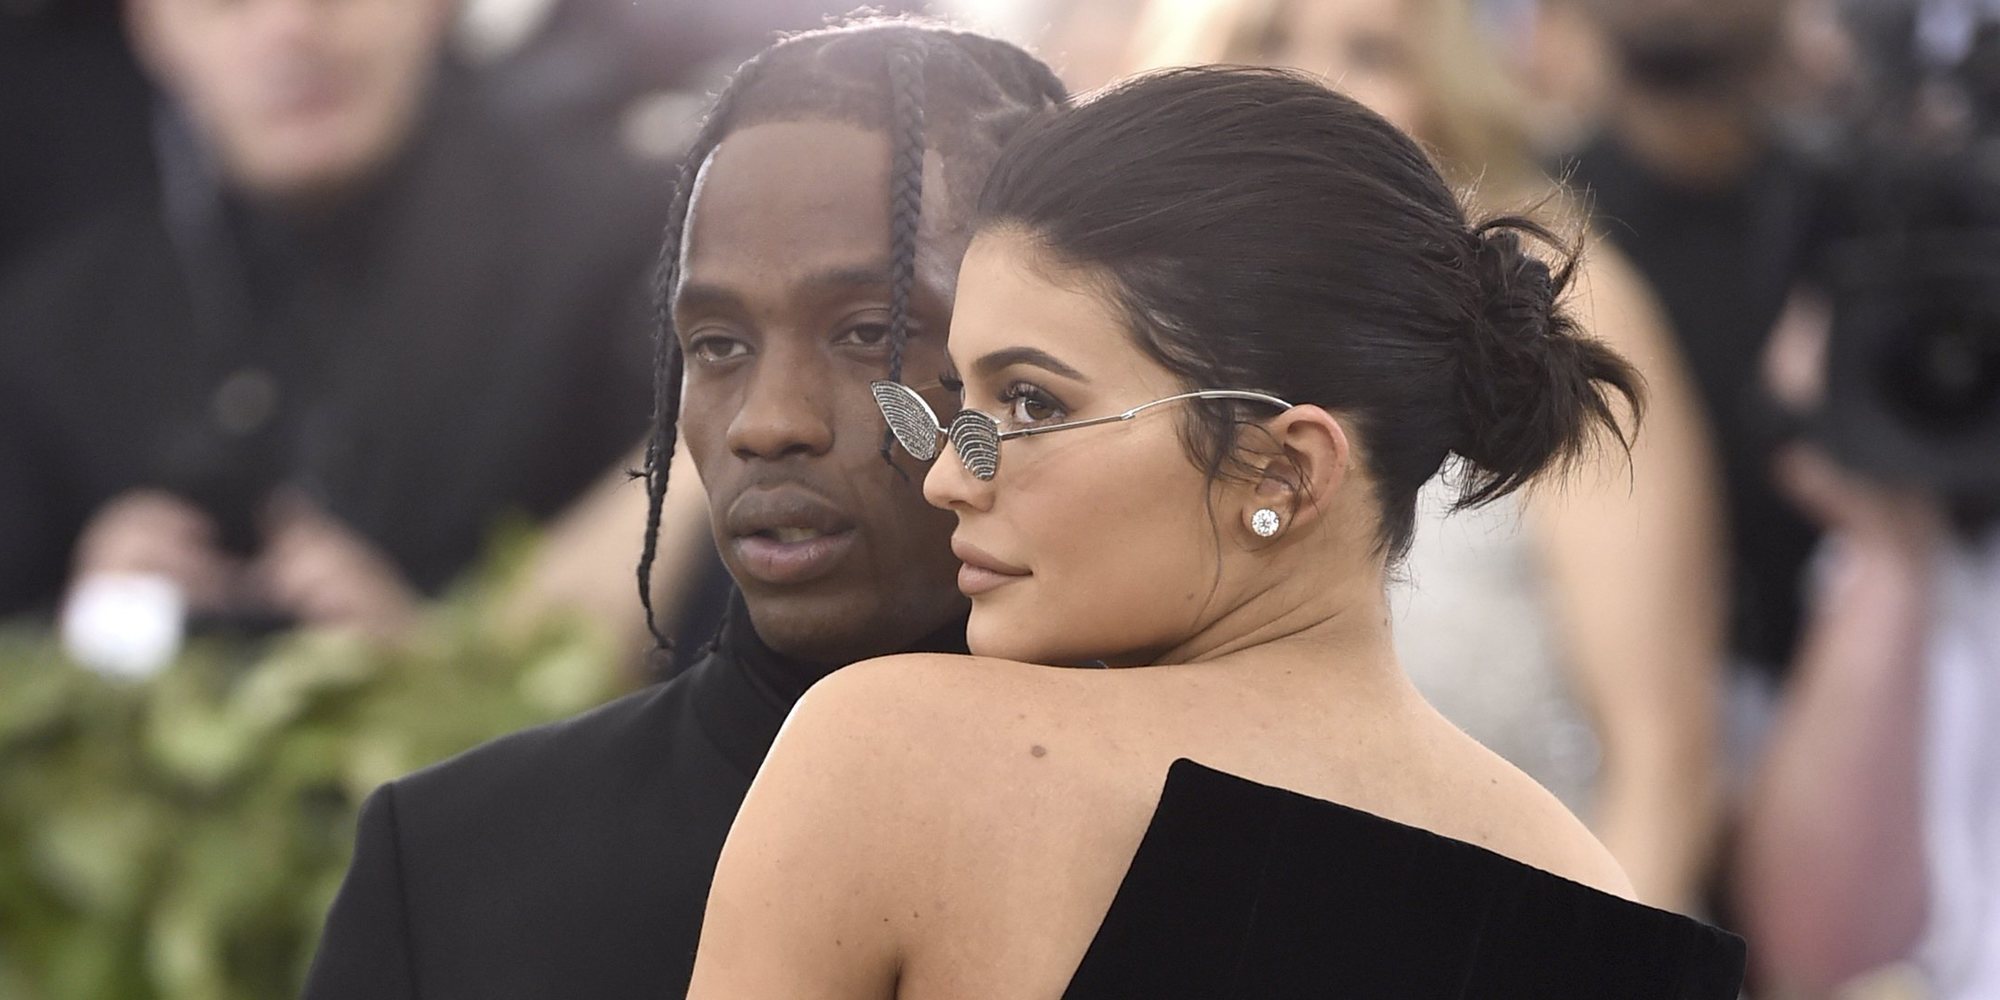 Después de Khloé Kardashian la desgracia se cierne sobre Kylie Jenner: Travis Scott acusado de serle infiel